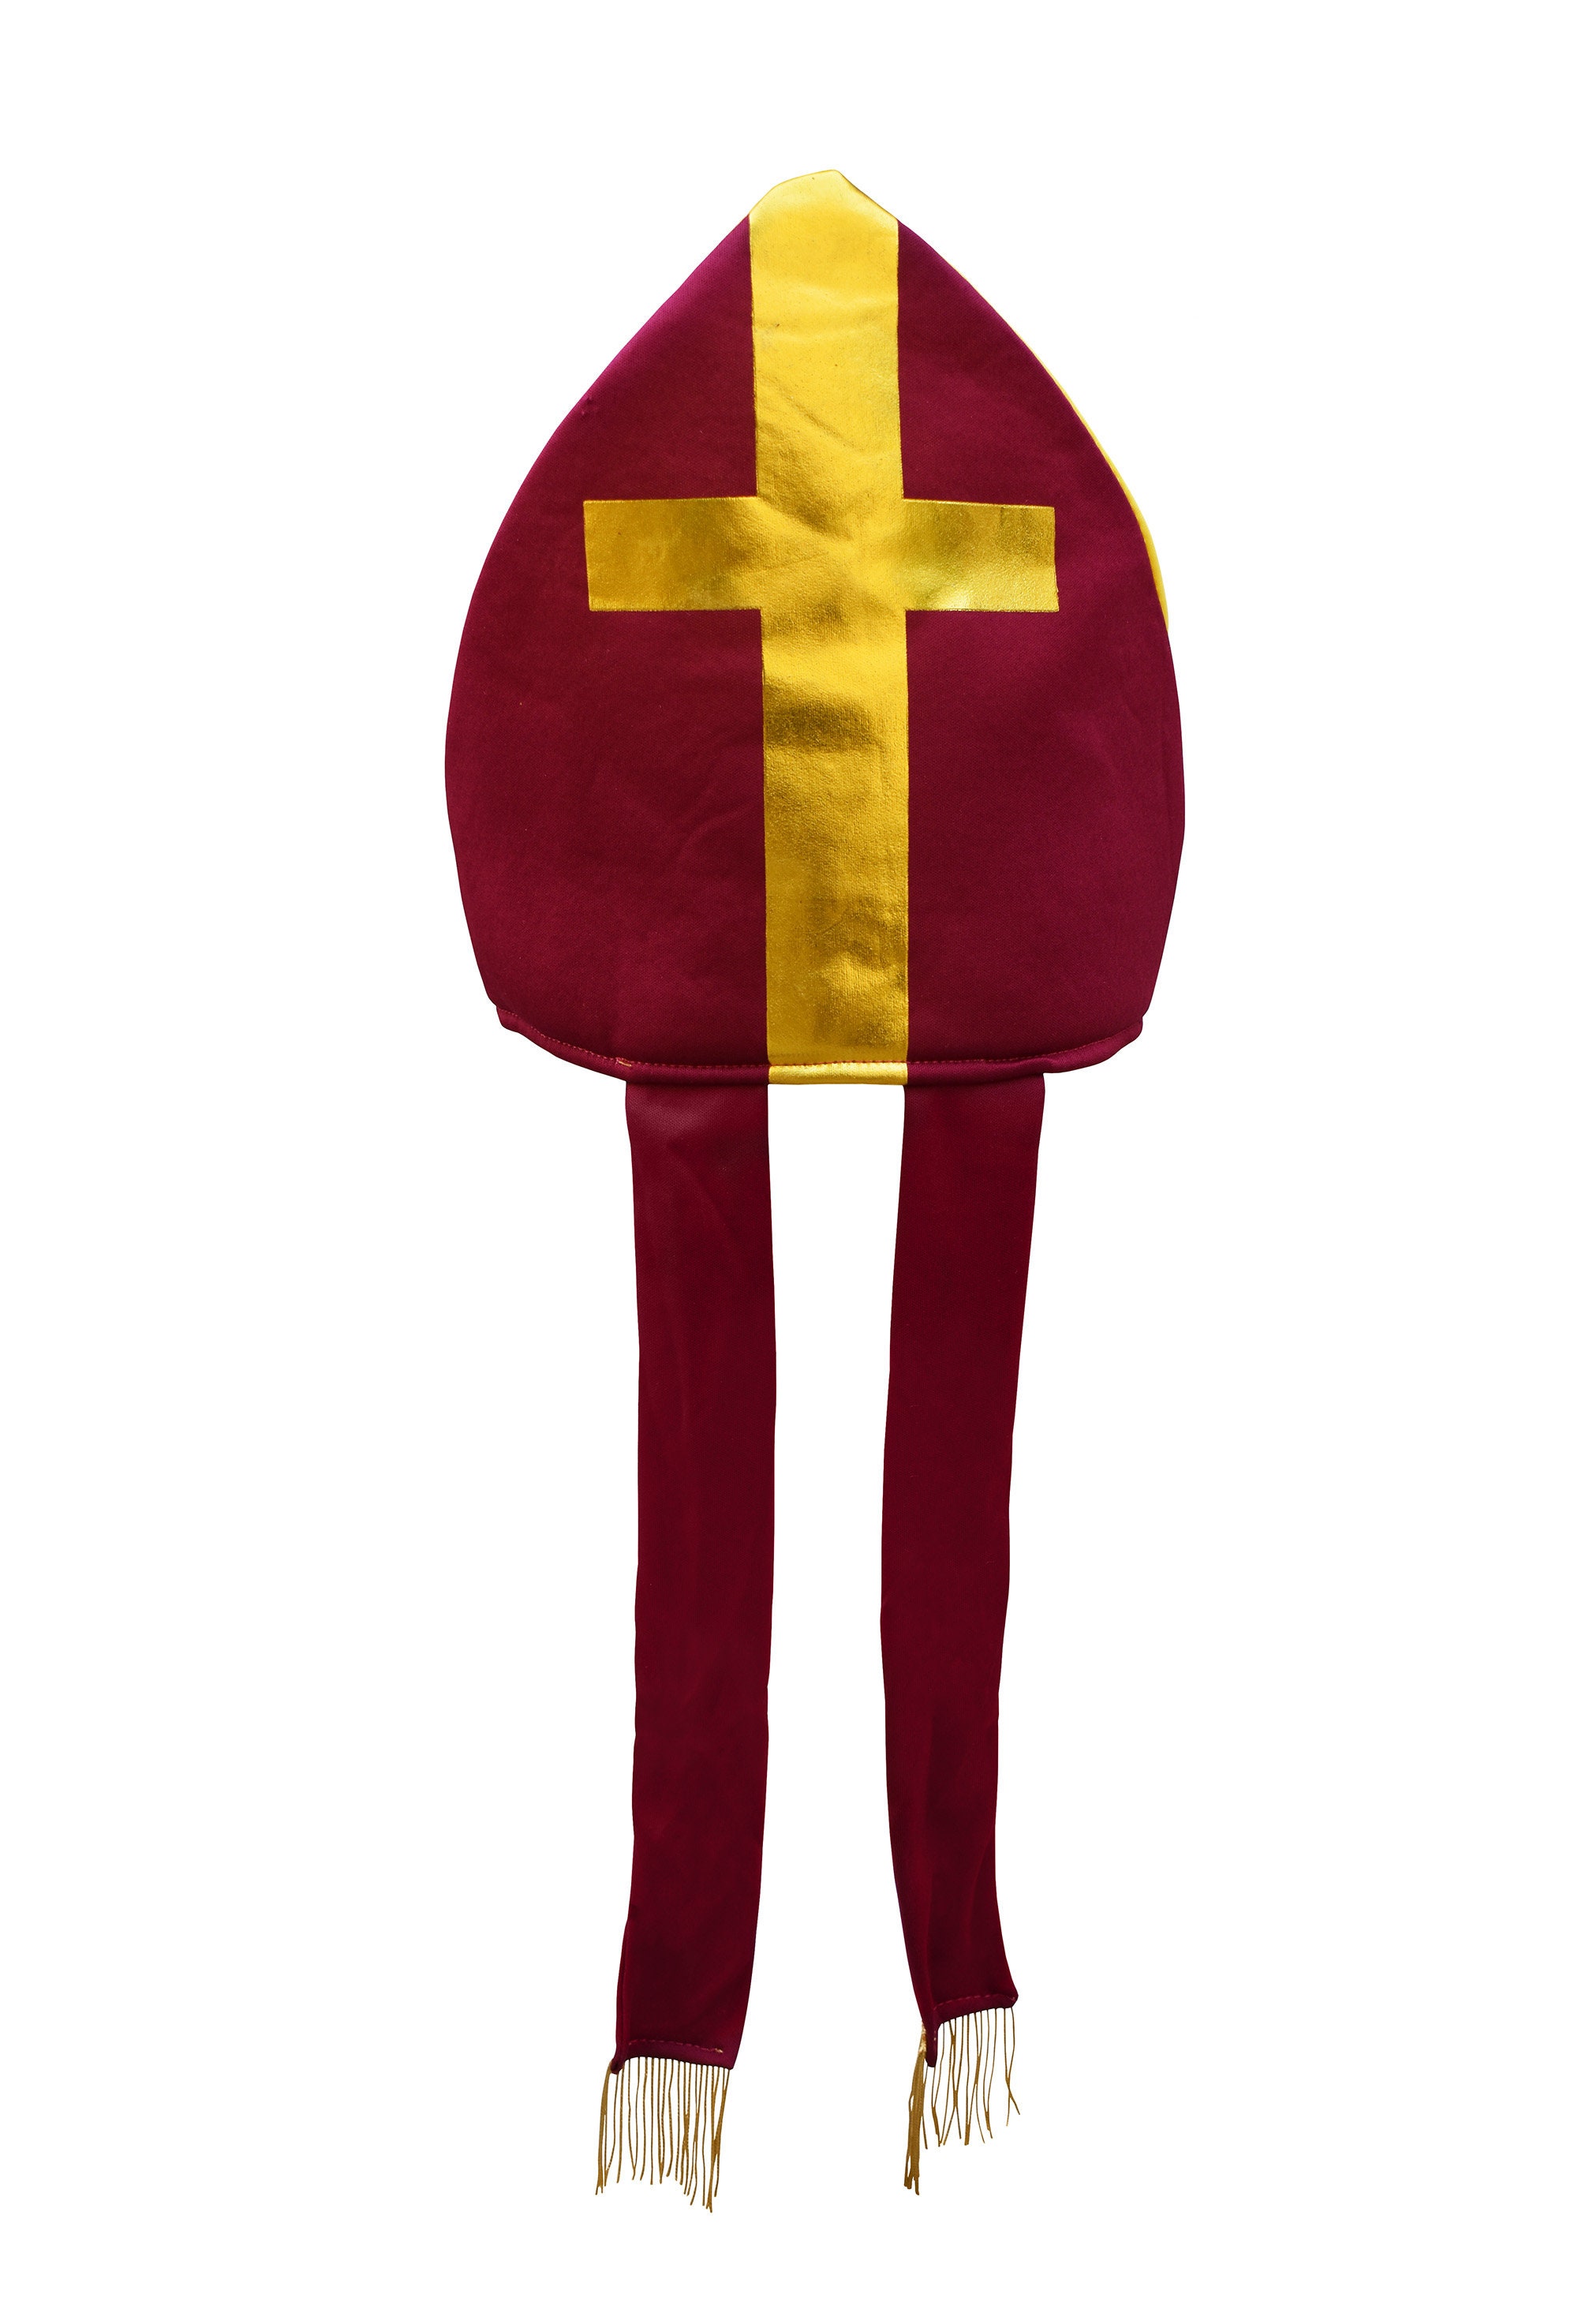 Unisex Adult Plush Bishop Priest Pope Costume Hat CHOOSE Color 